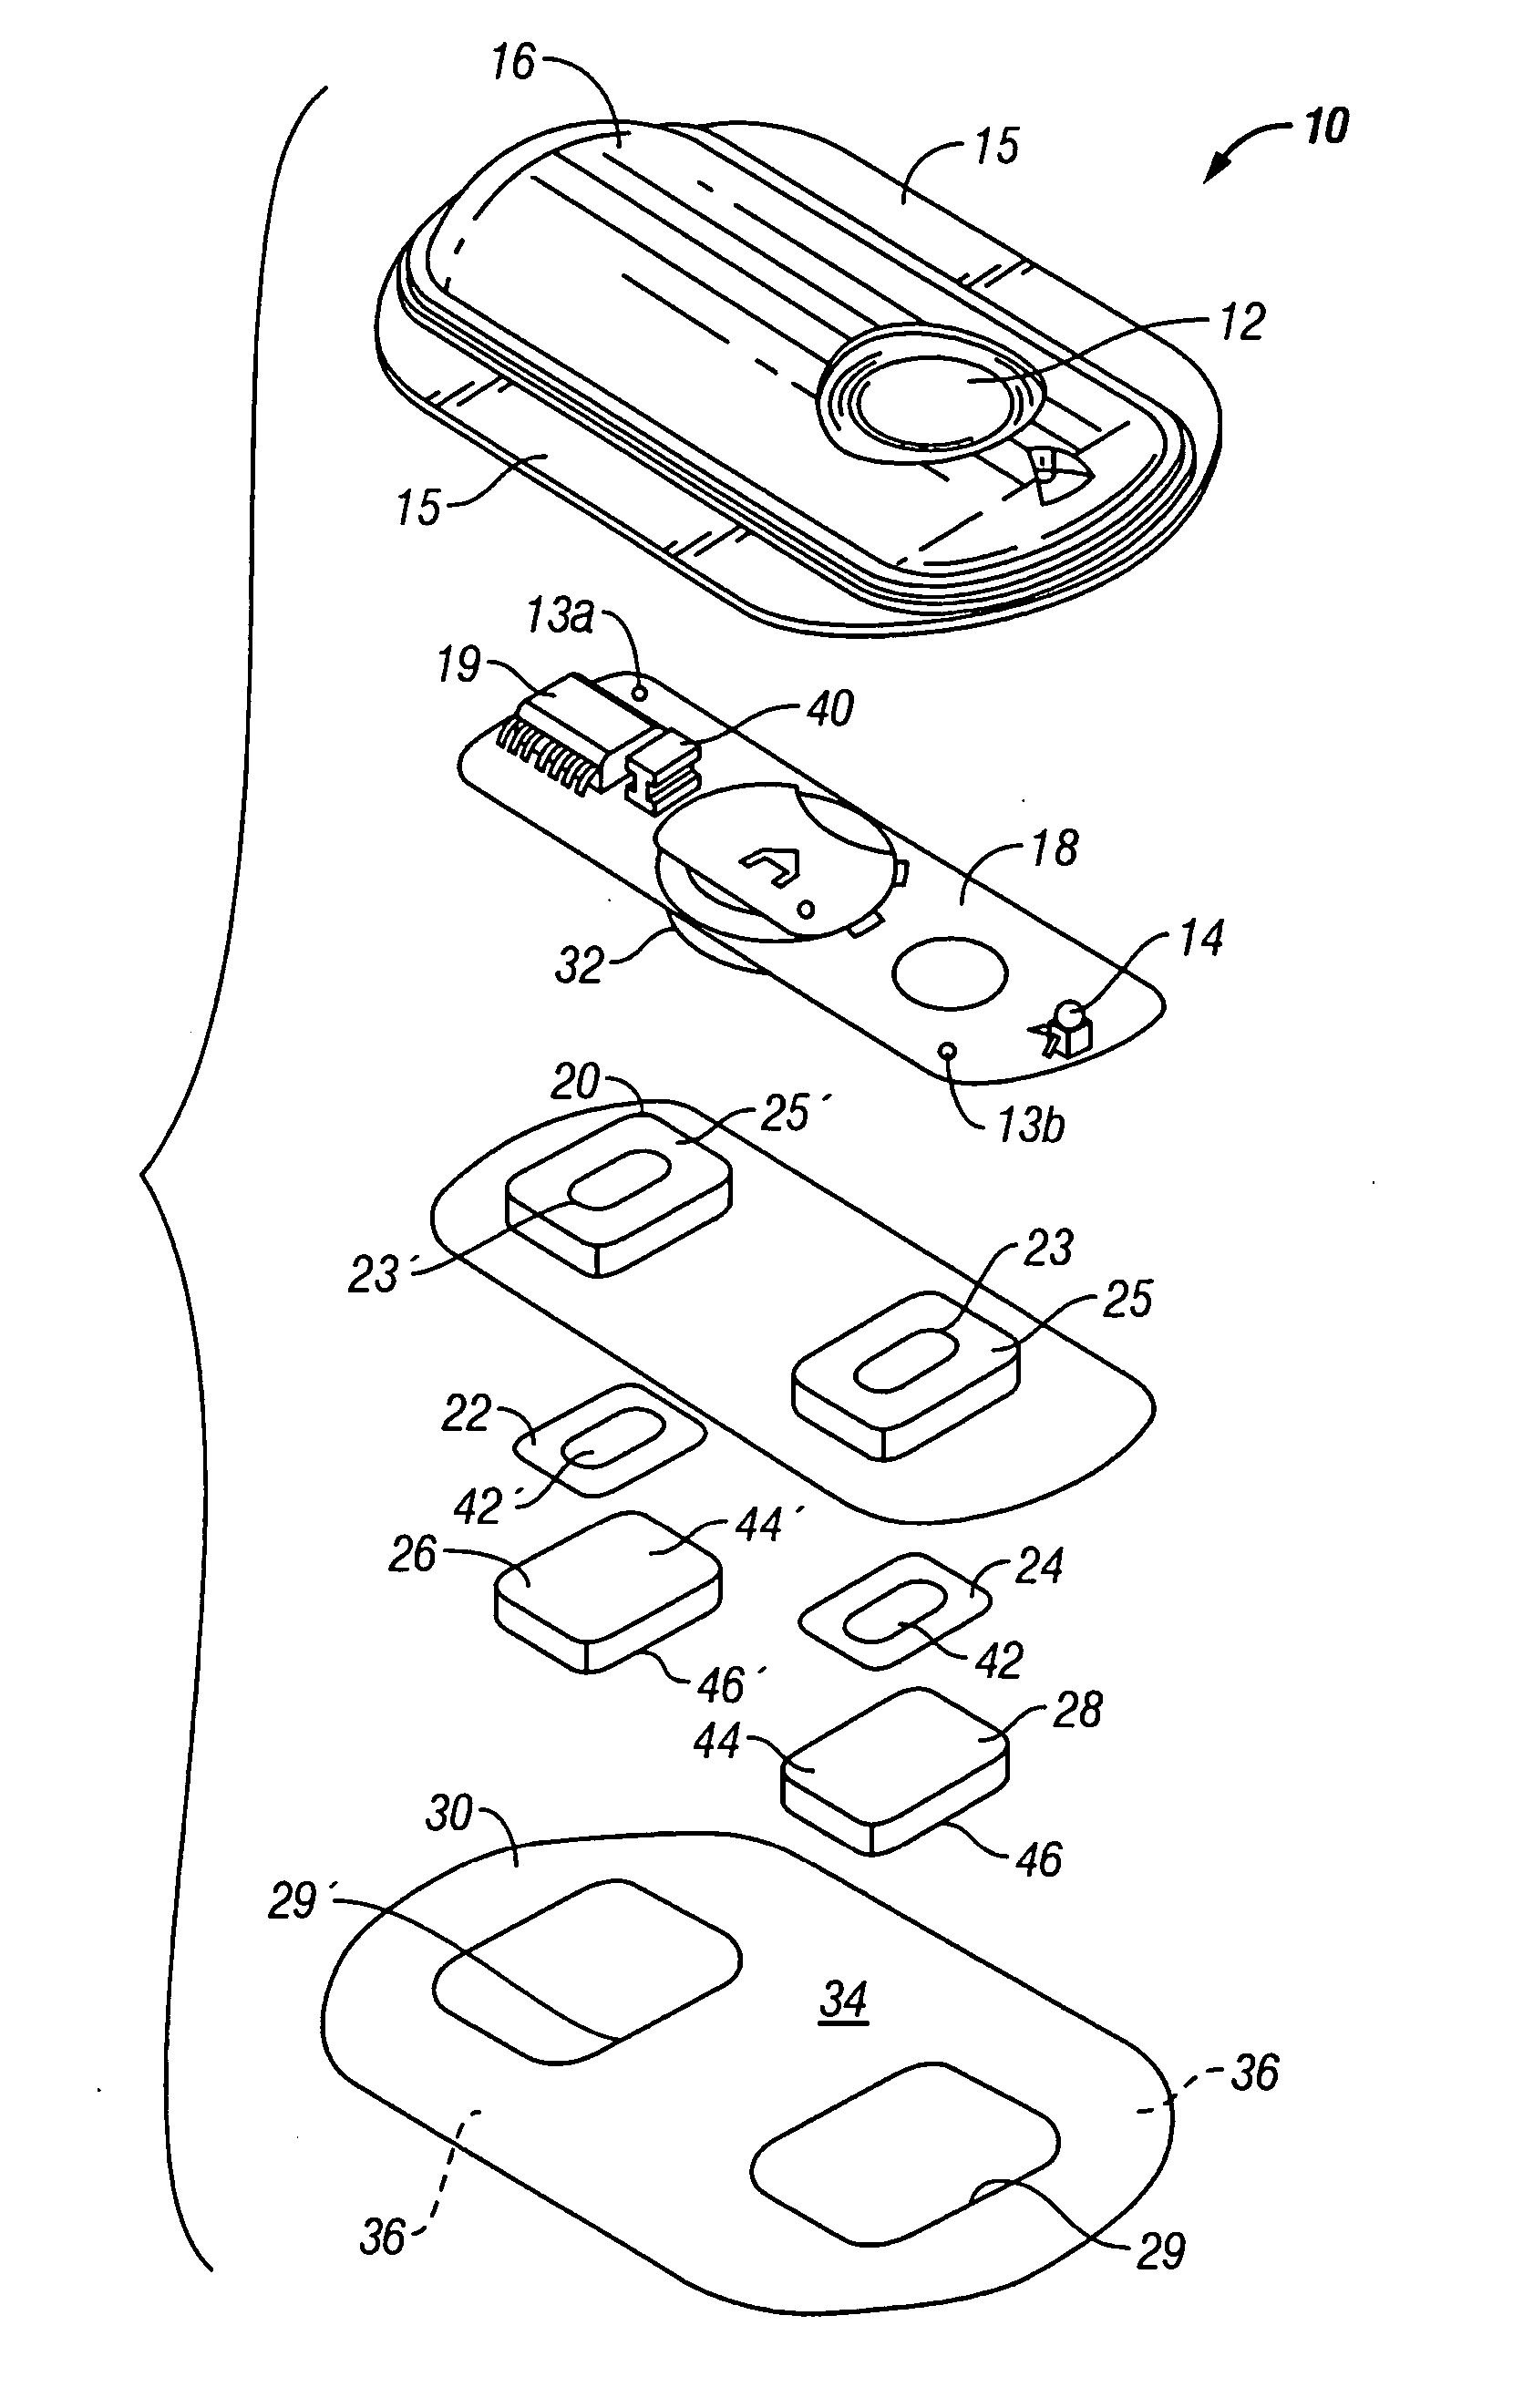 Electrotransport device having a reservoir housing having a flexible conductive element